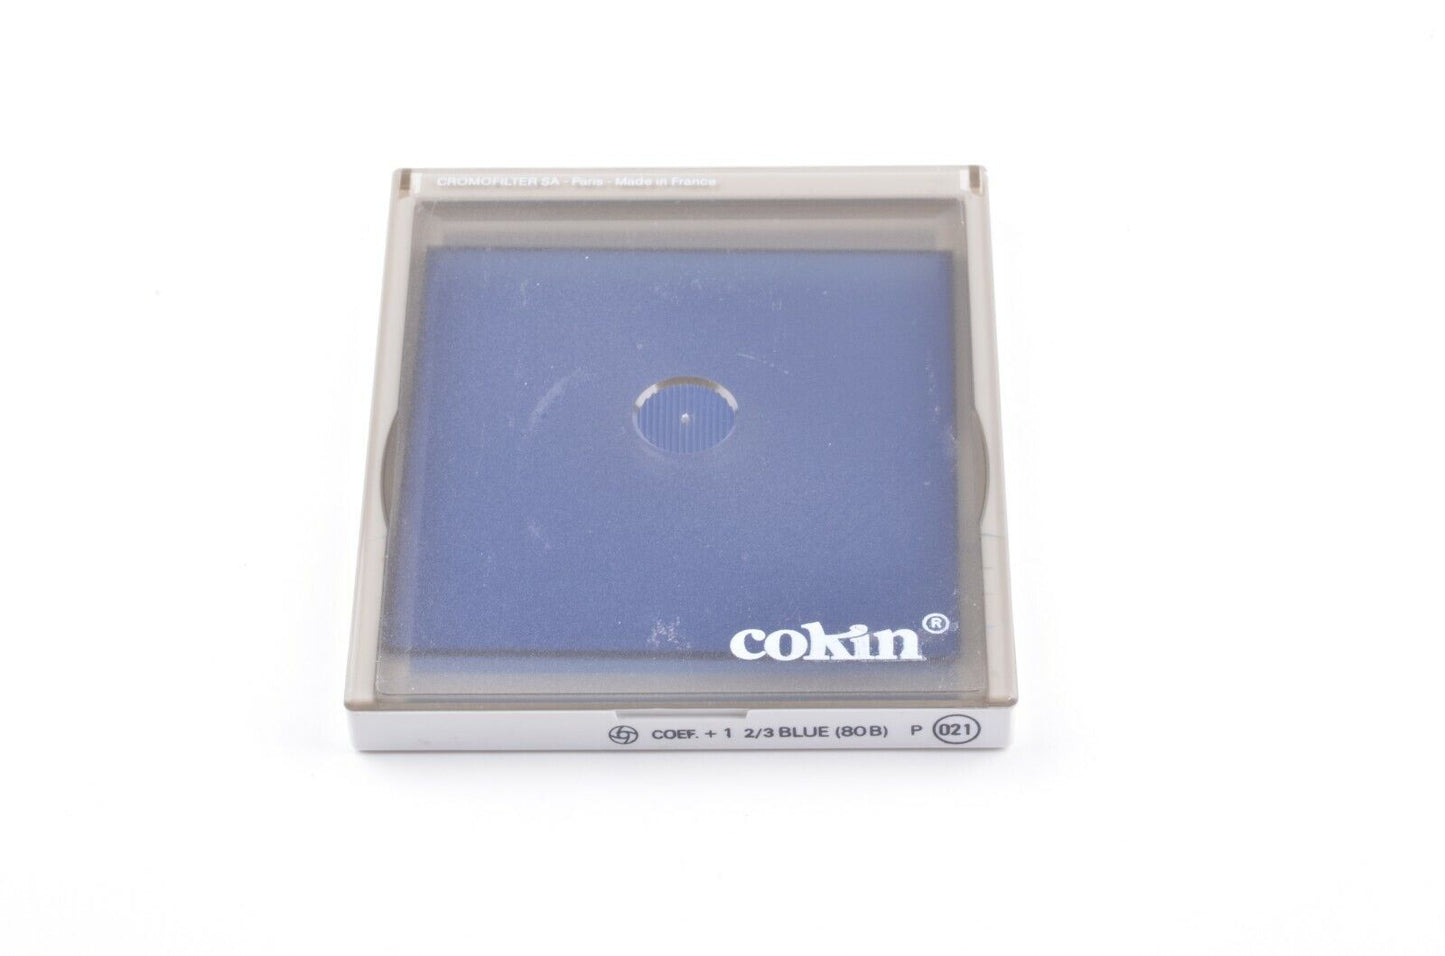 MINT GENUINE COKIN COEF. + 1 2/3 BLUE (80B) P021 FILTER IN JEWEL CASE